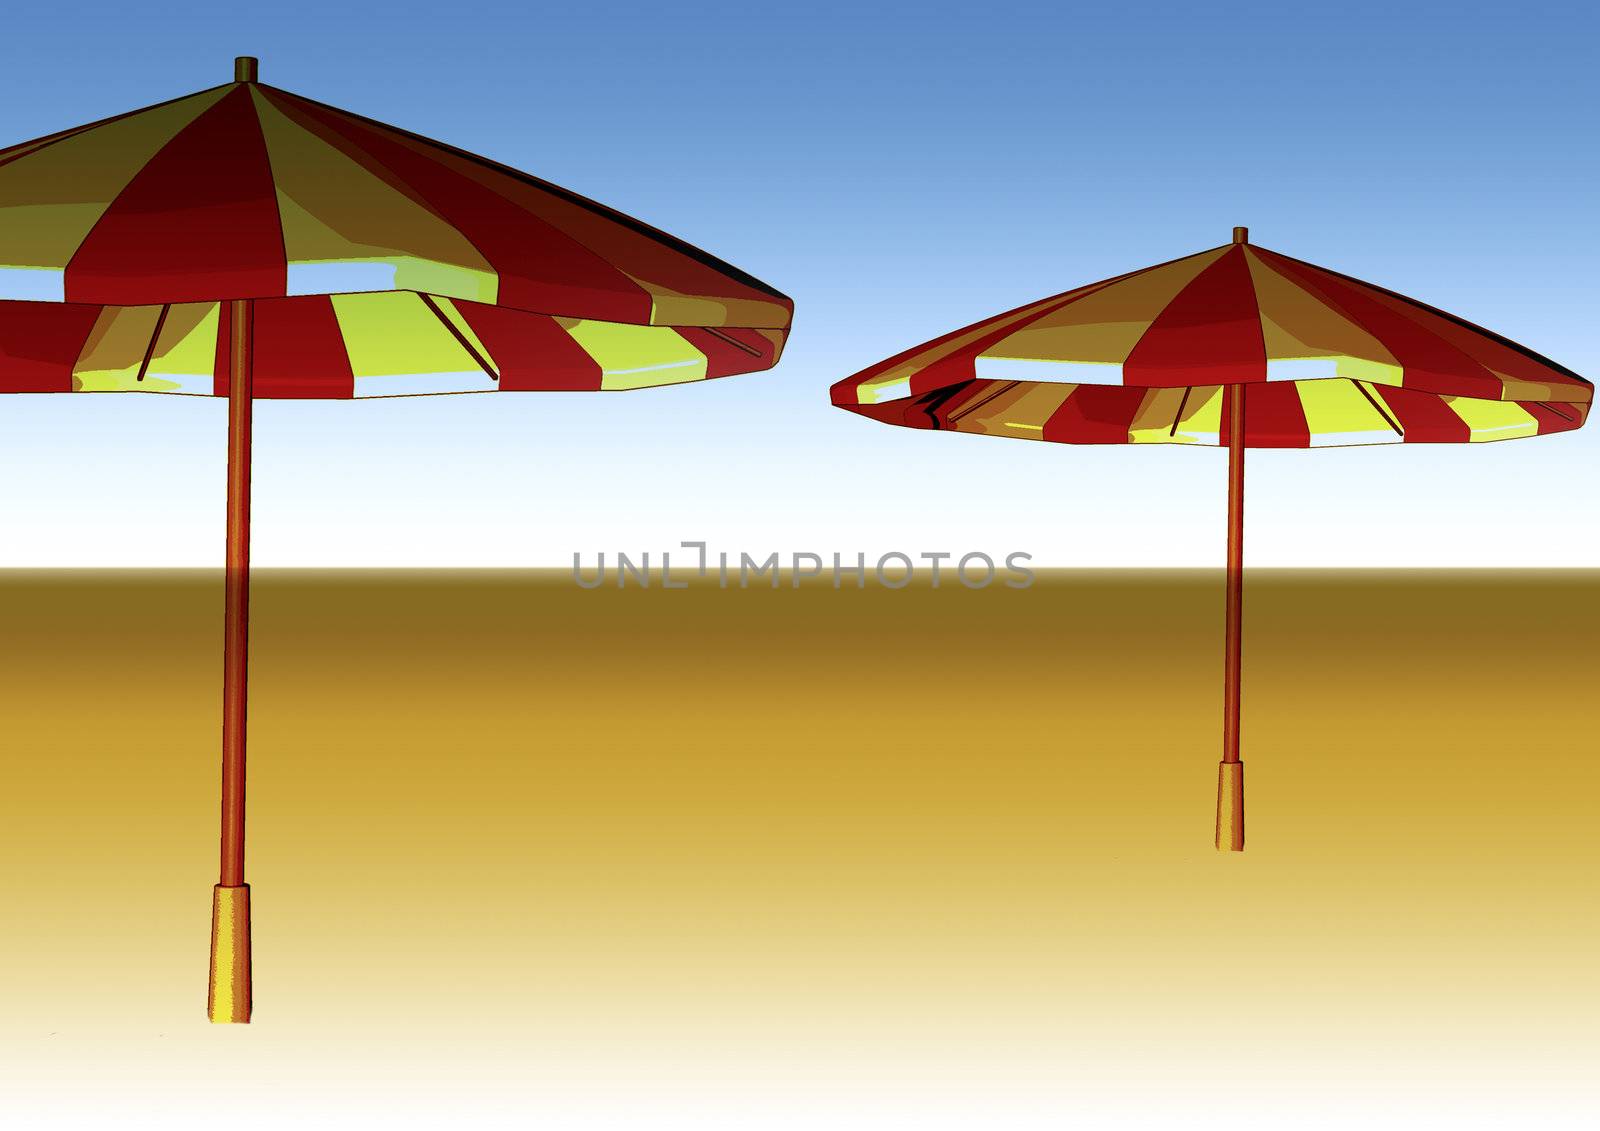 sketched illustration of two beach umbrellas by paddythegolfer